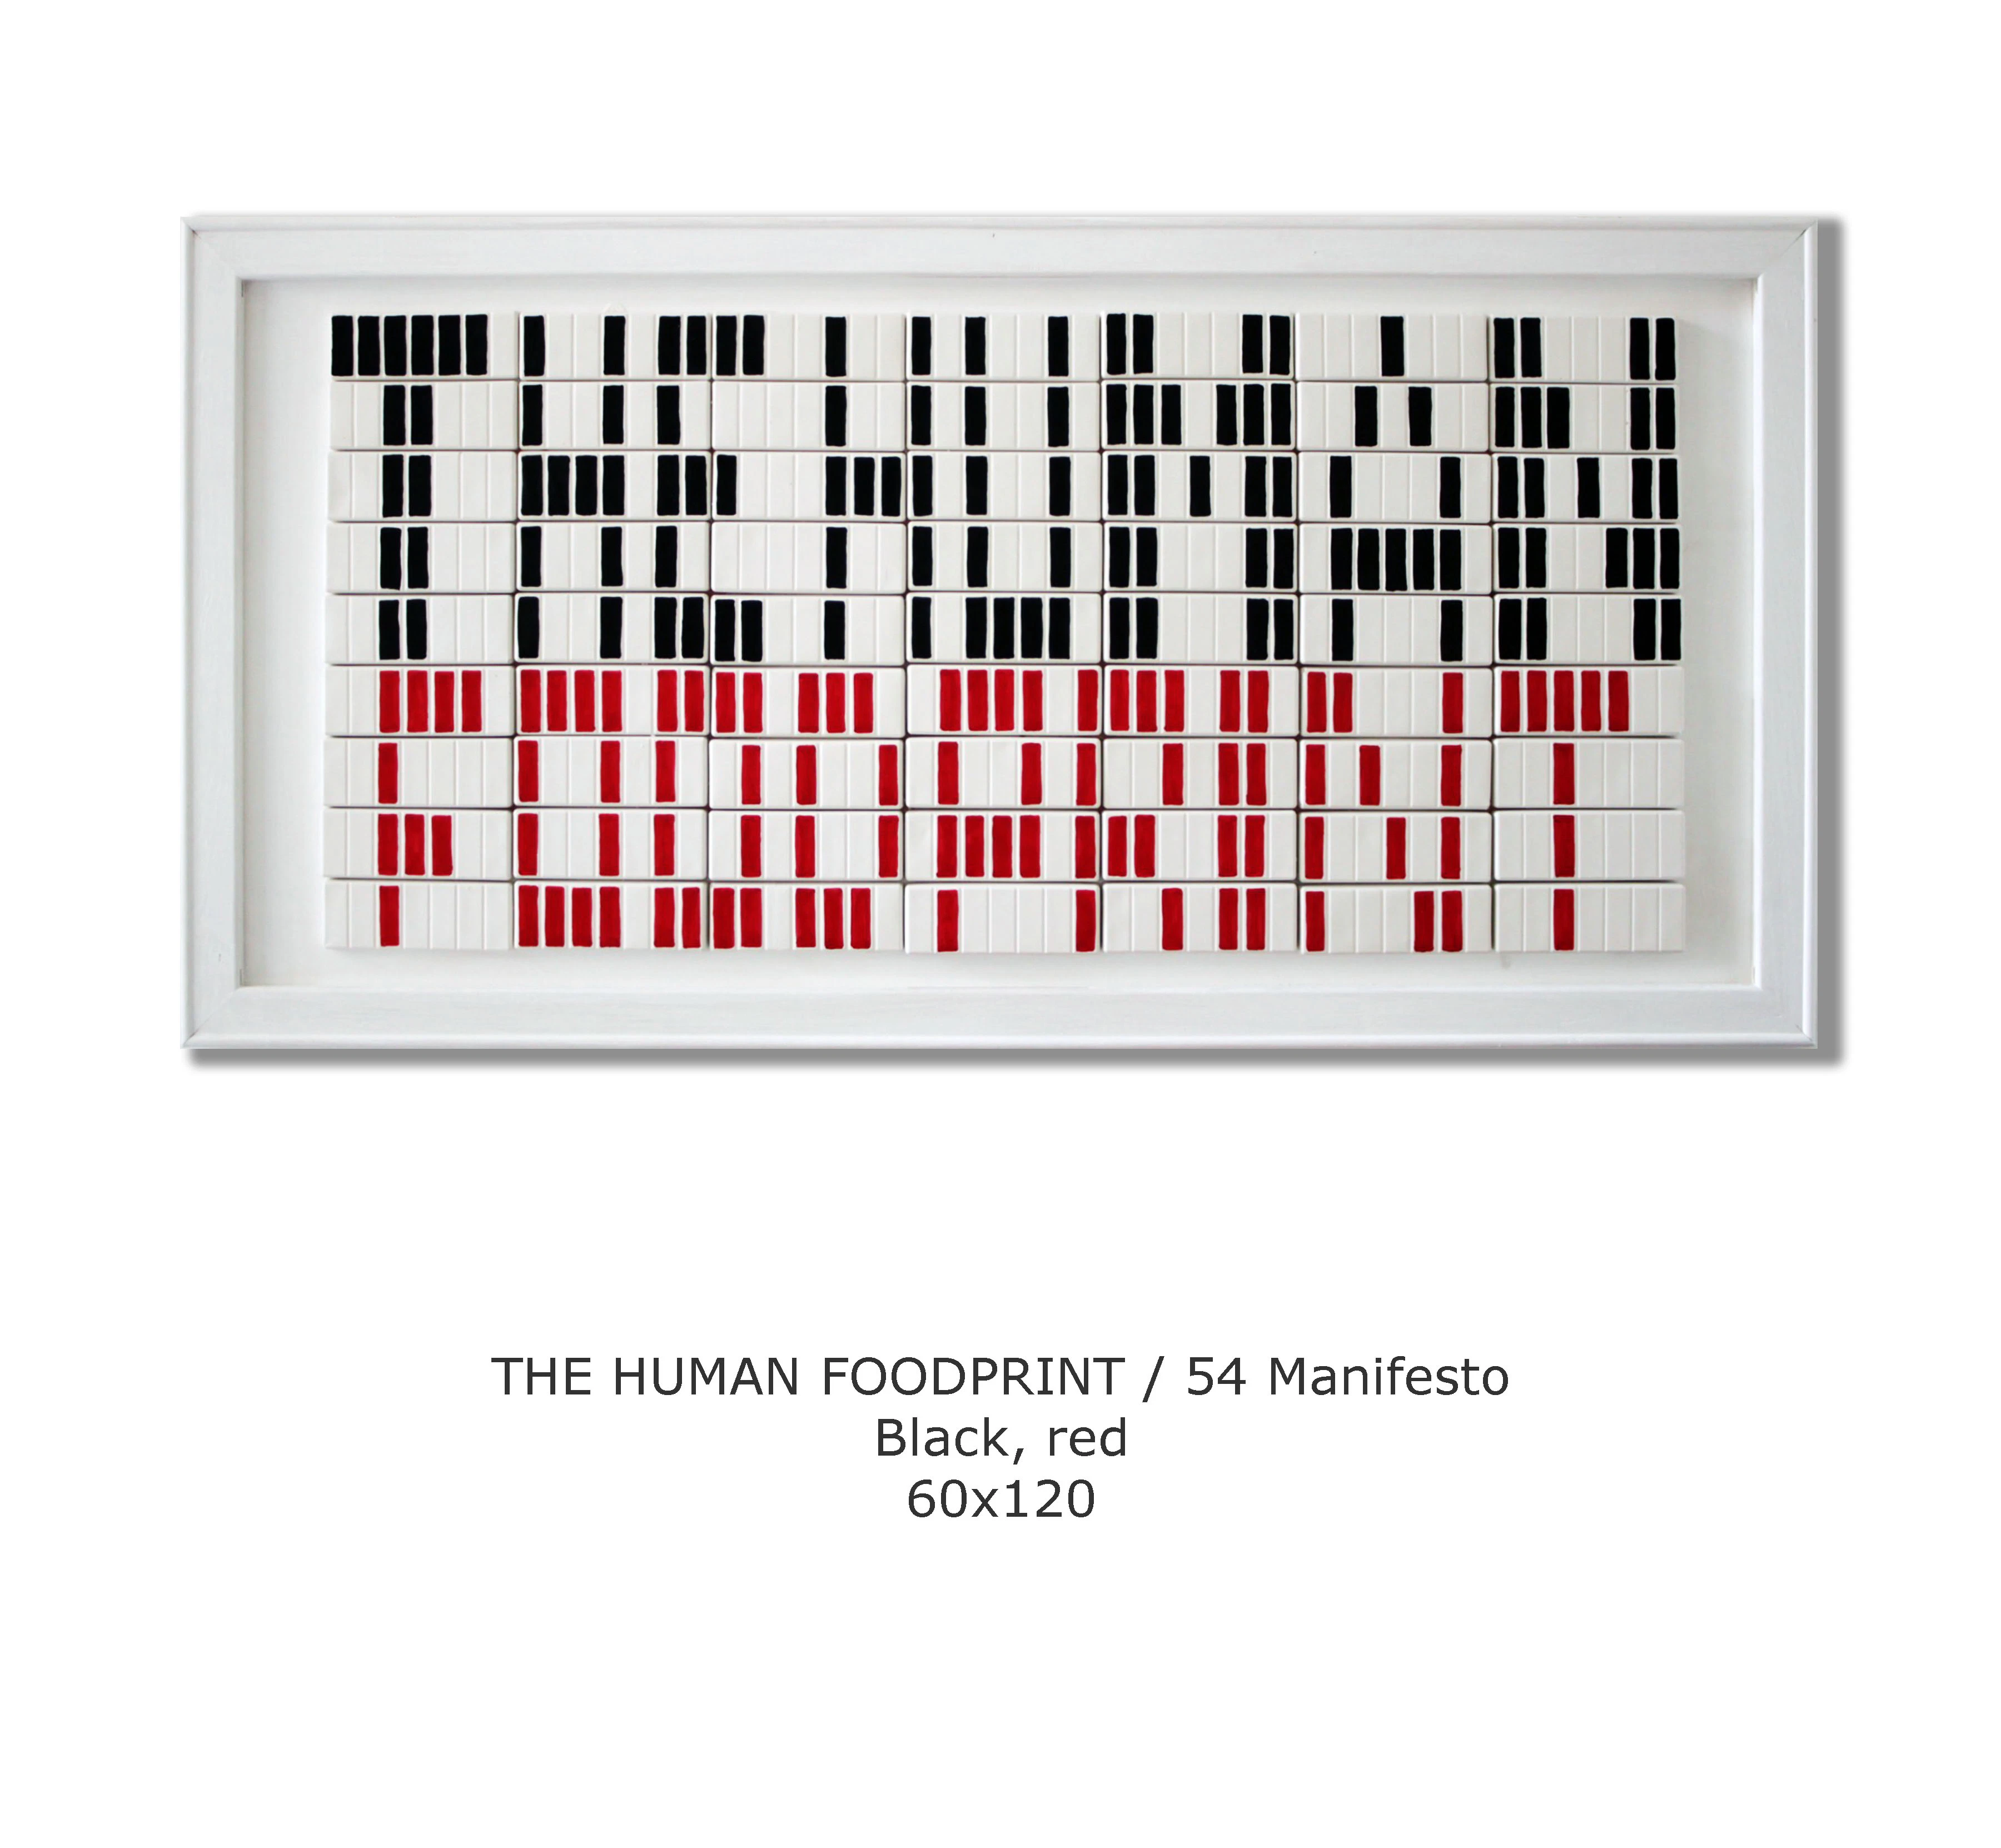 THE HUMAN FOODPRINT